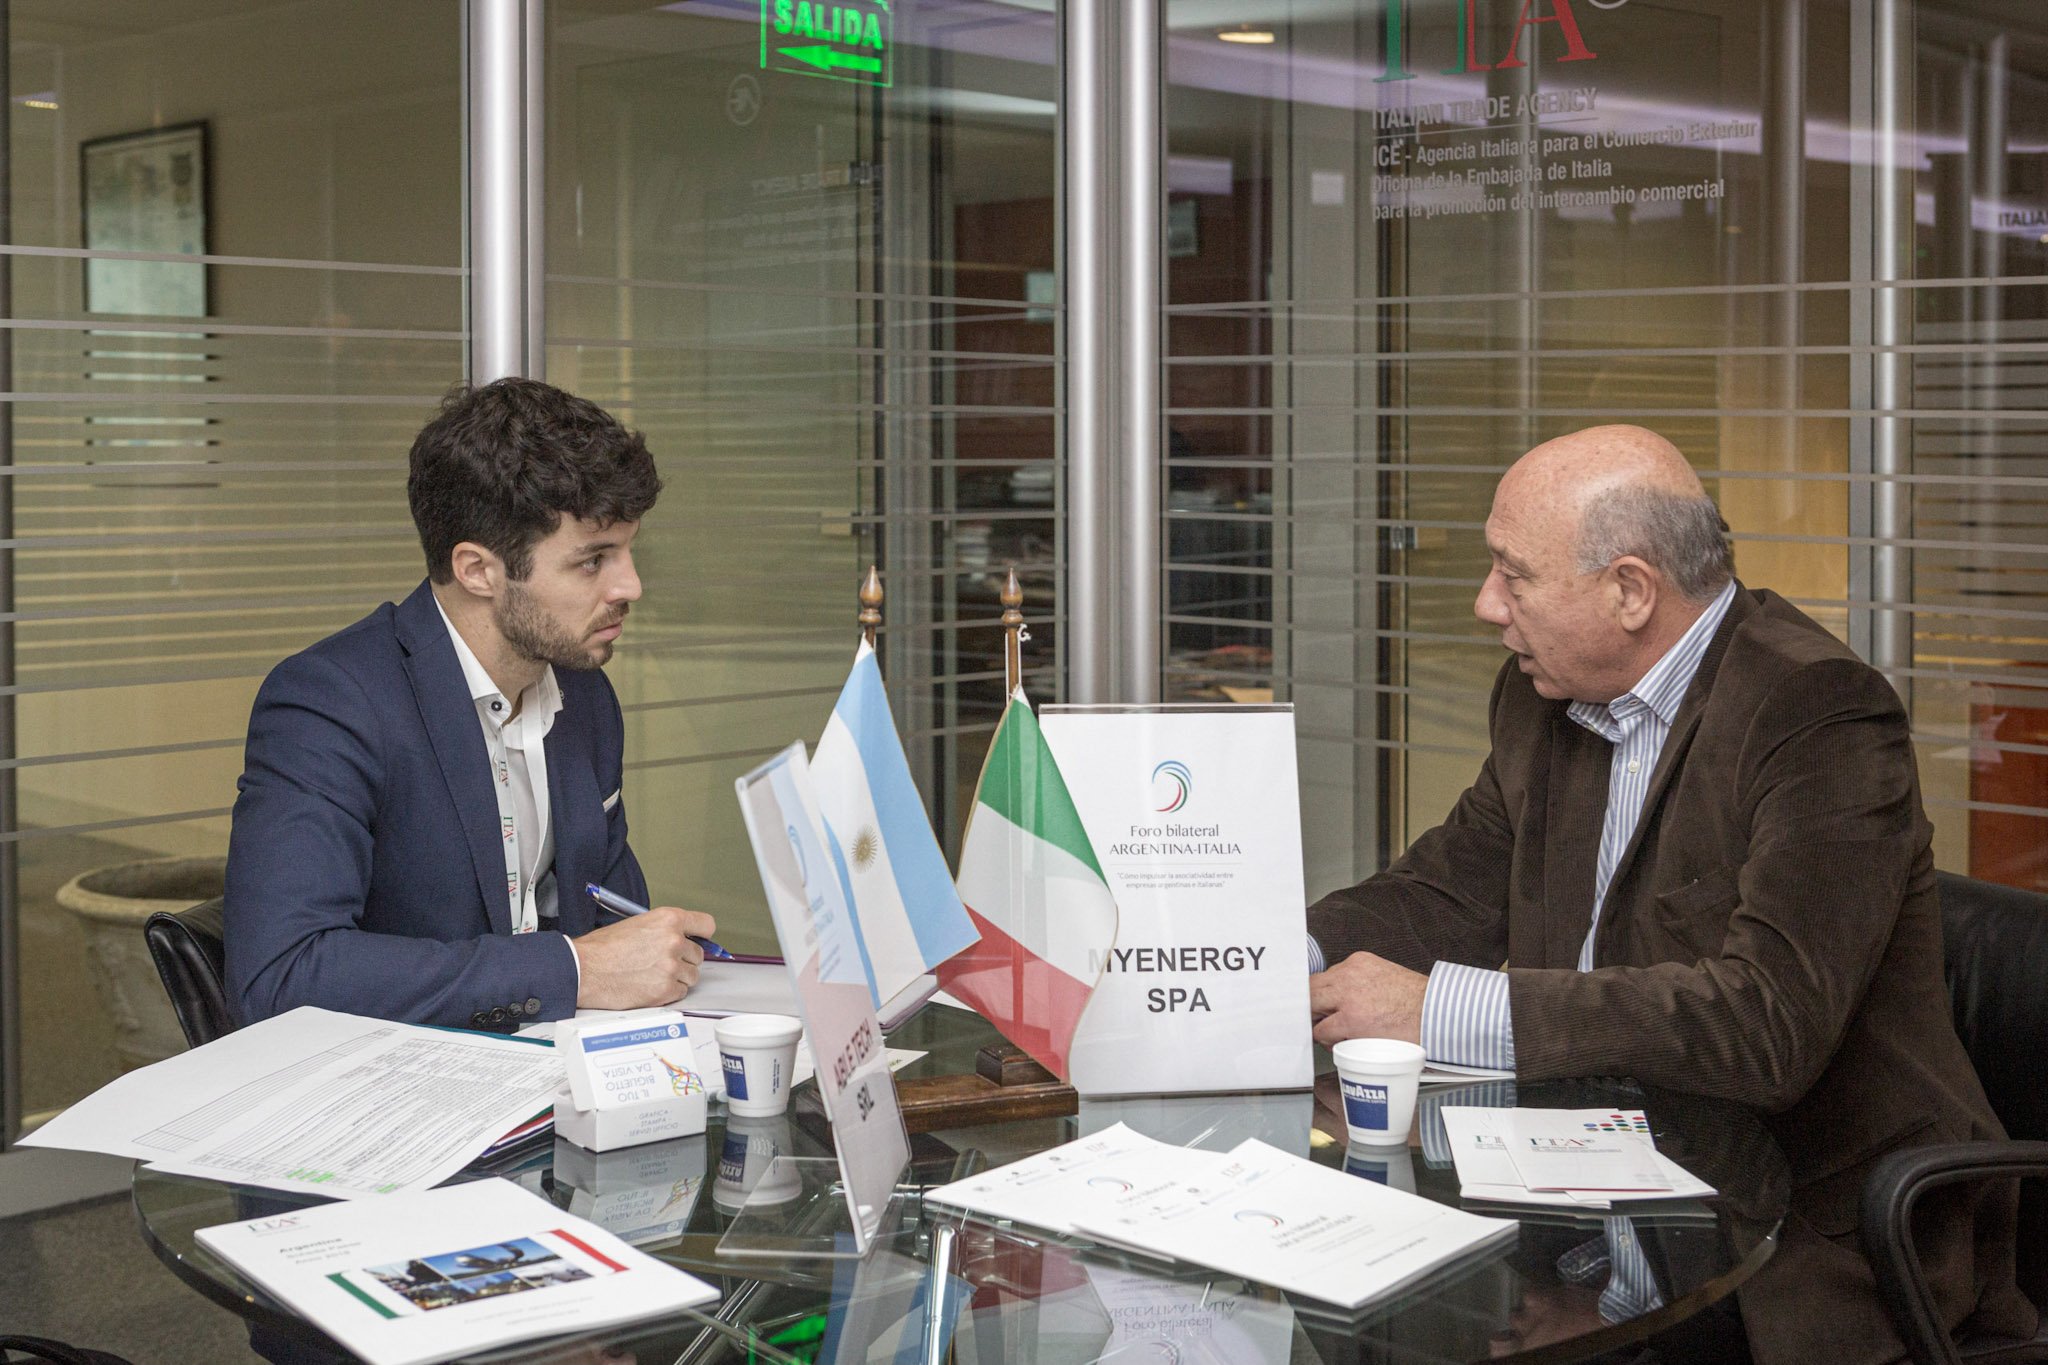 Forum Economico Bilaterale Italia-Argentina: Immagine 5